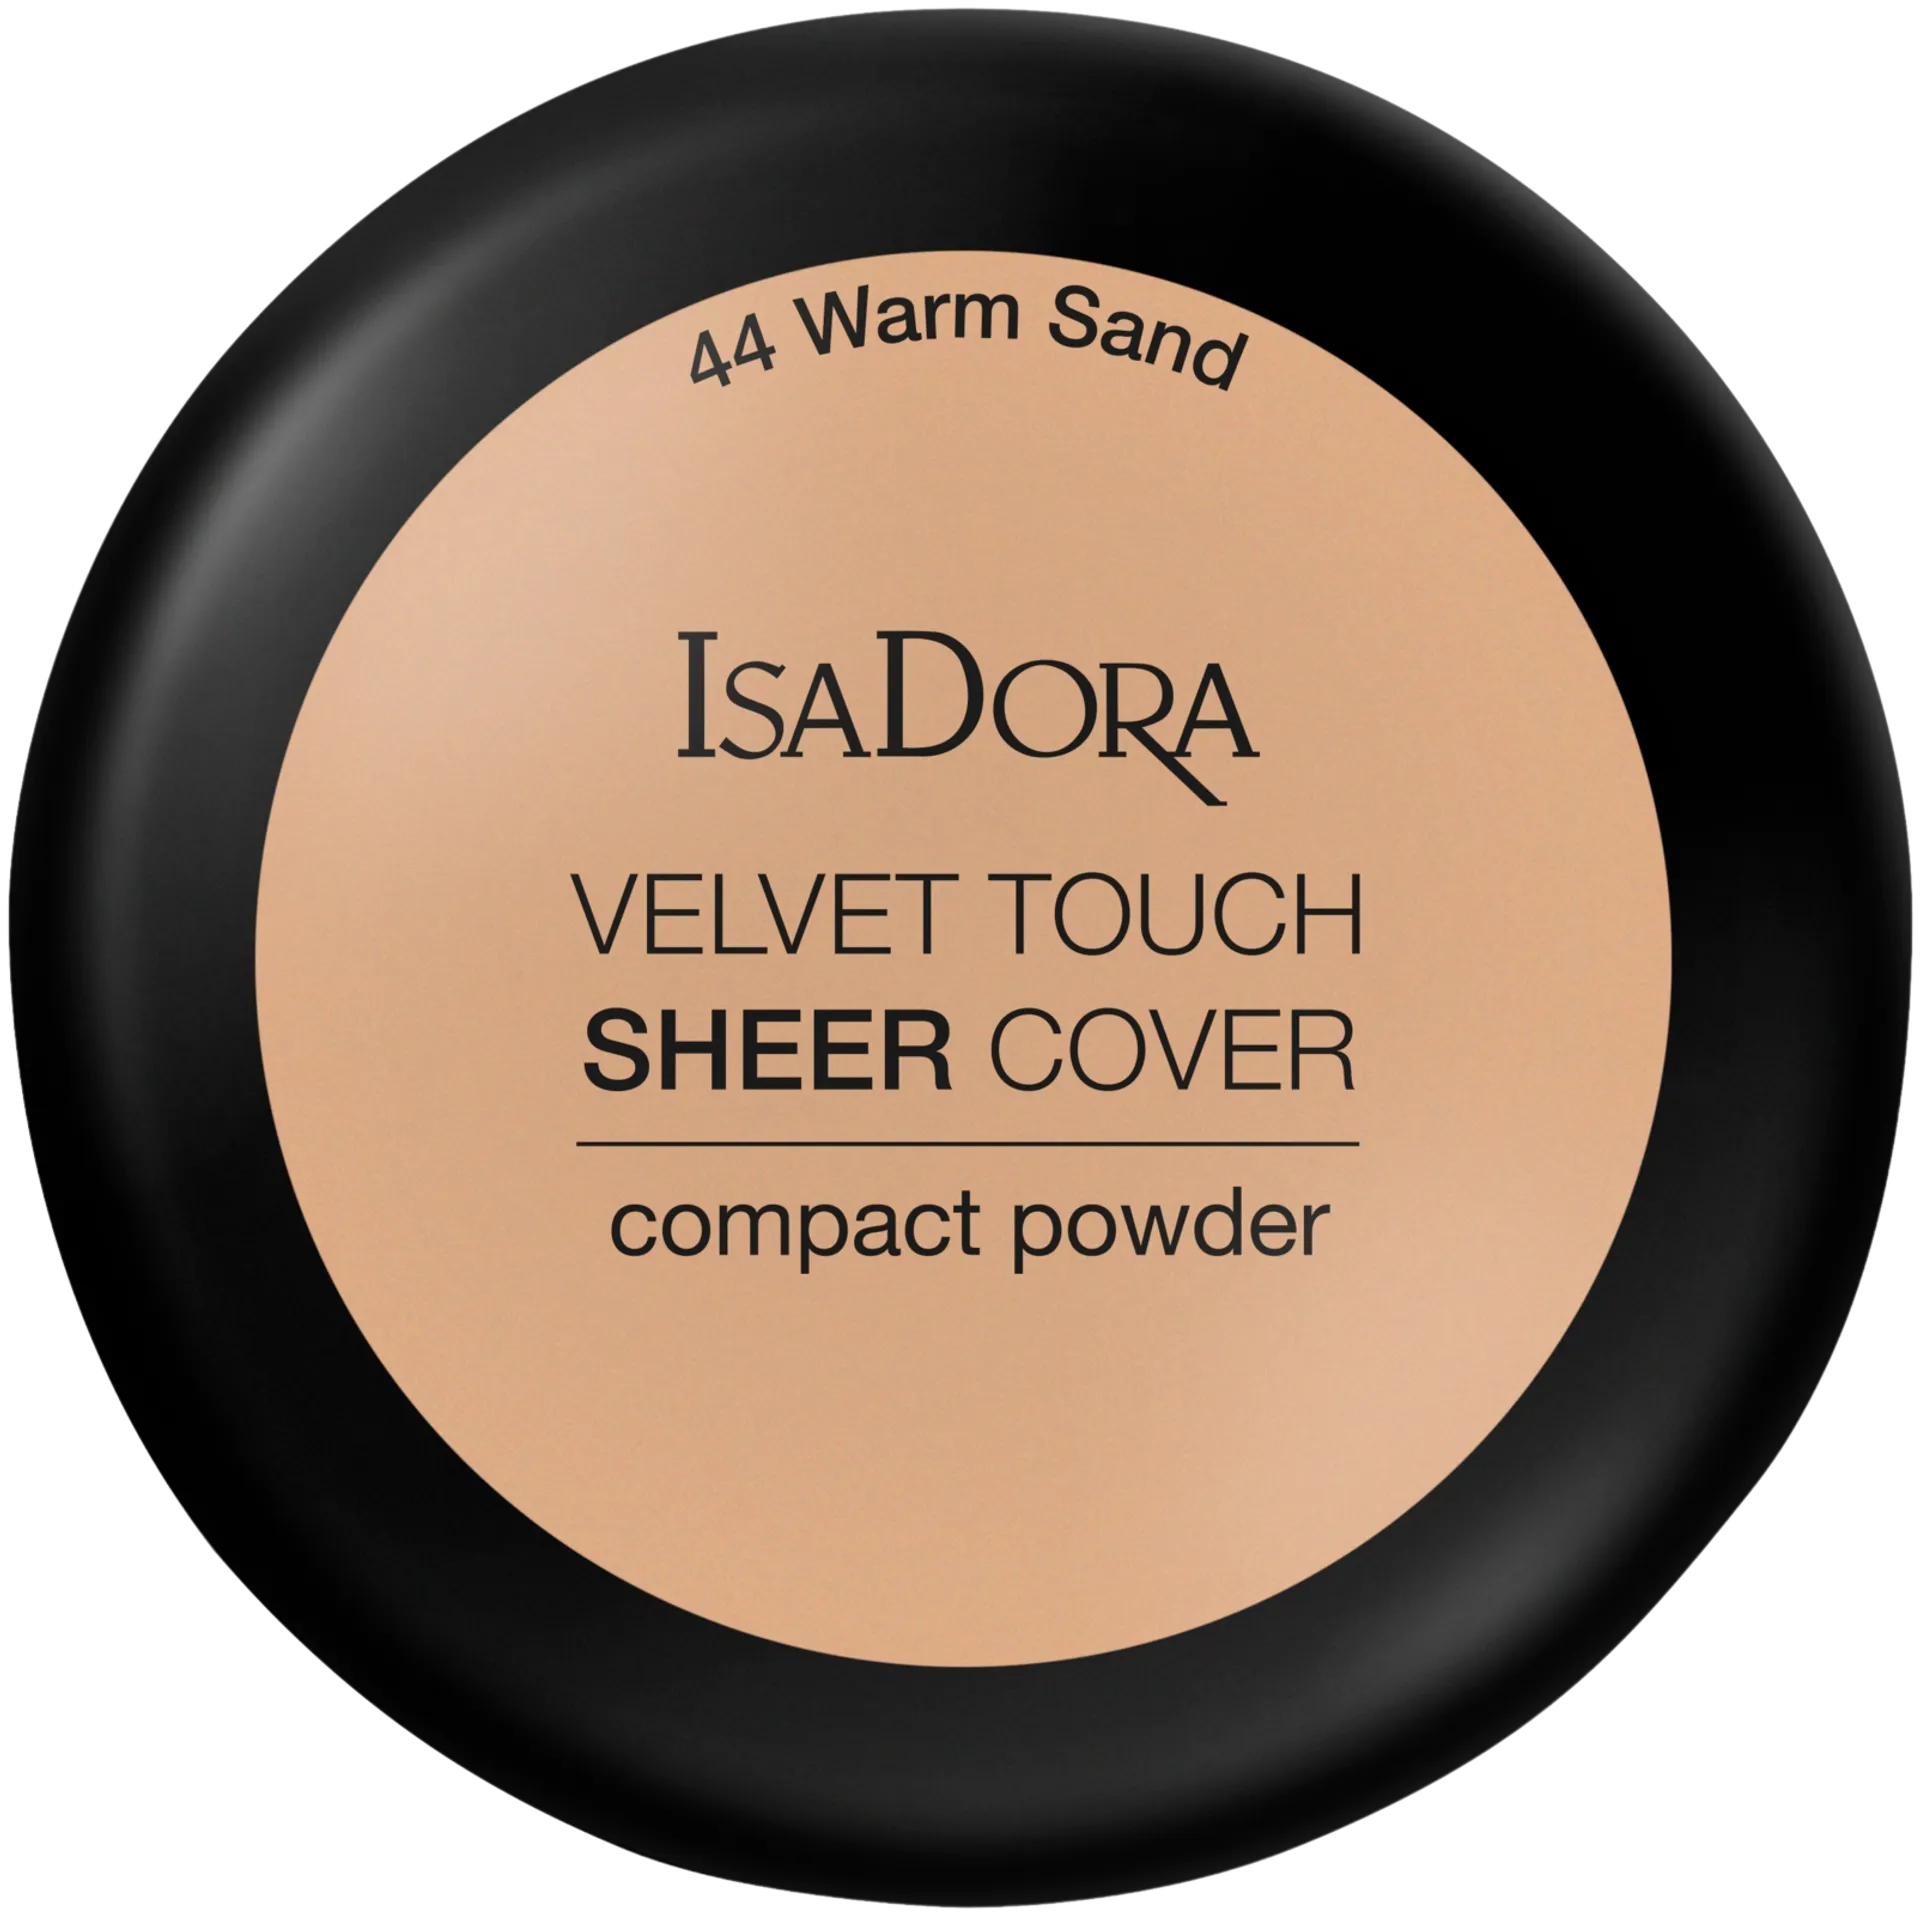 IsaDora Velvet Touch Sheer Cover Compact Powder 10 g 44 Warm Sand kivipuuteri - 2